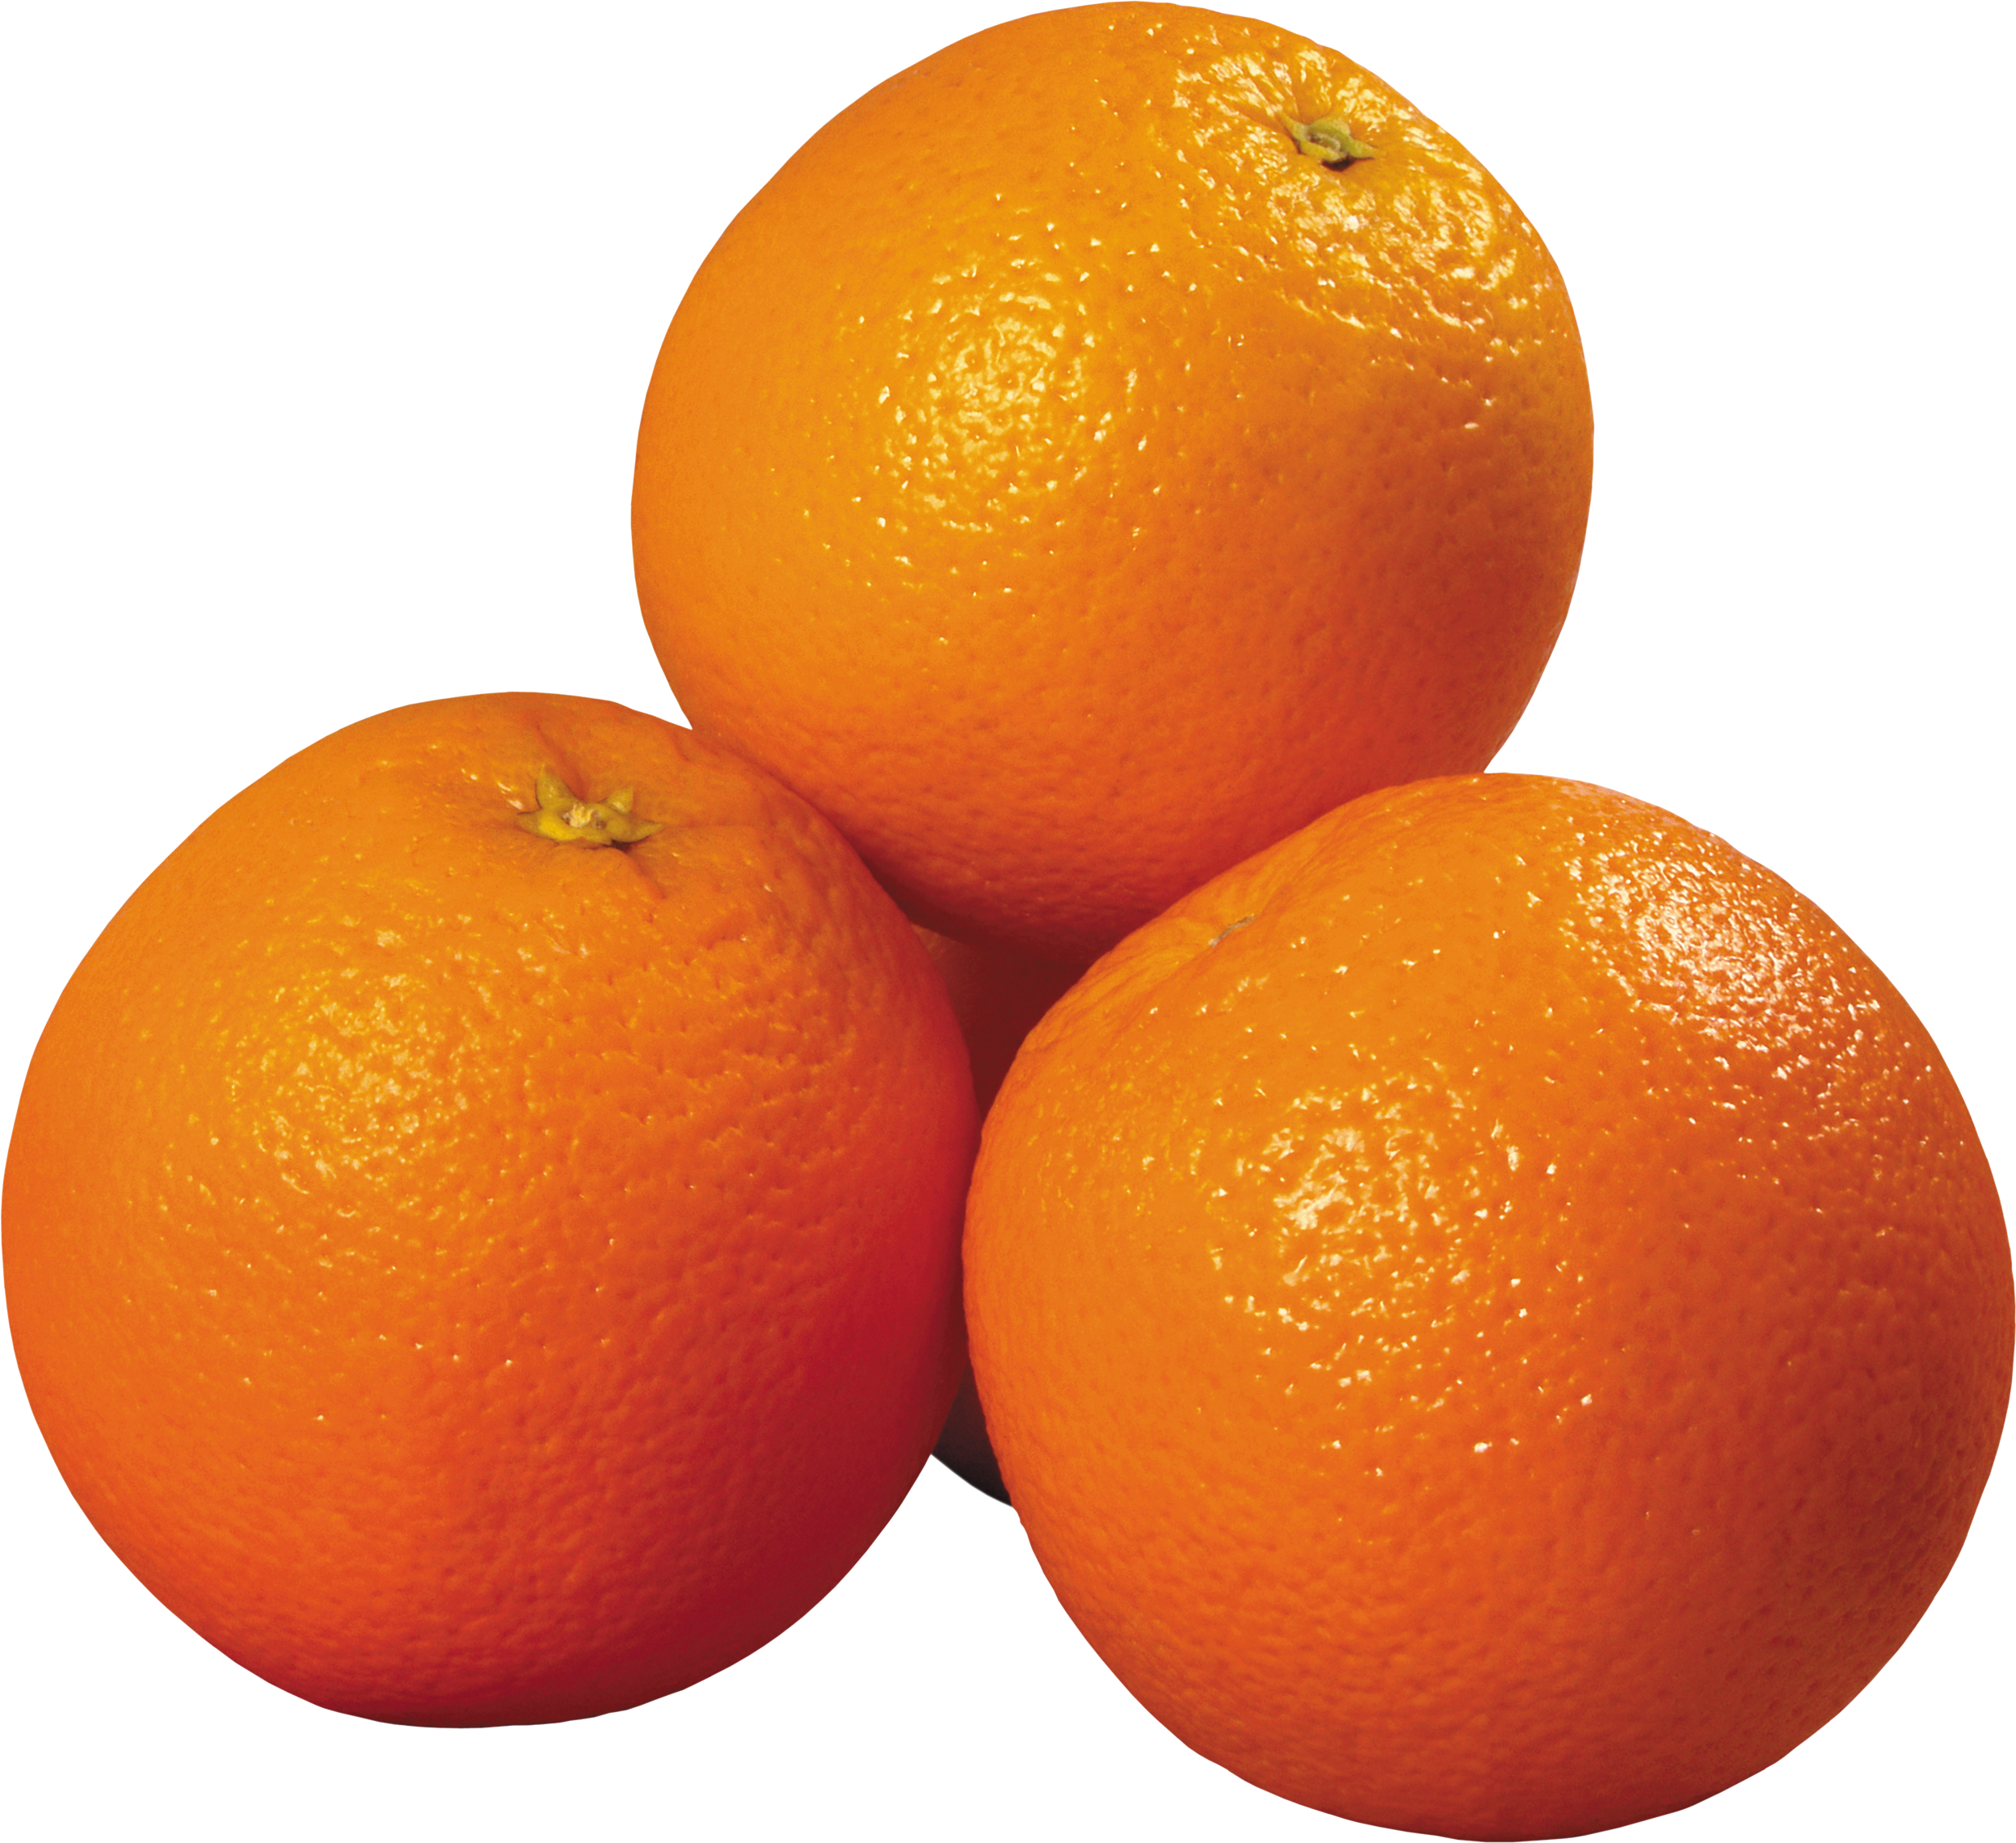 three oranges PNG image